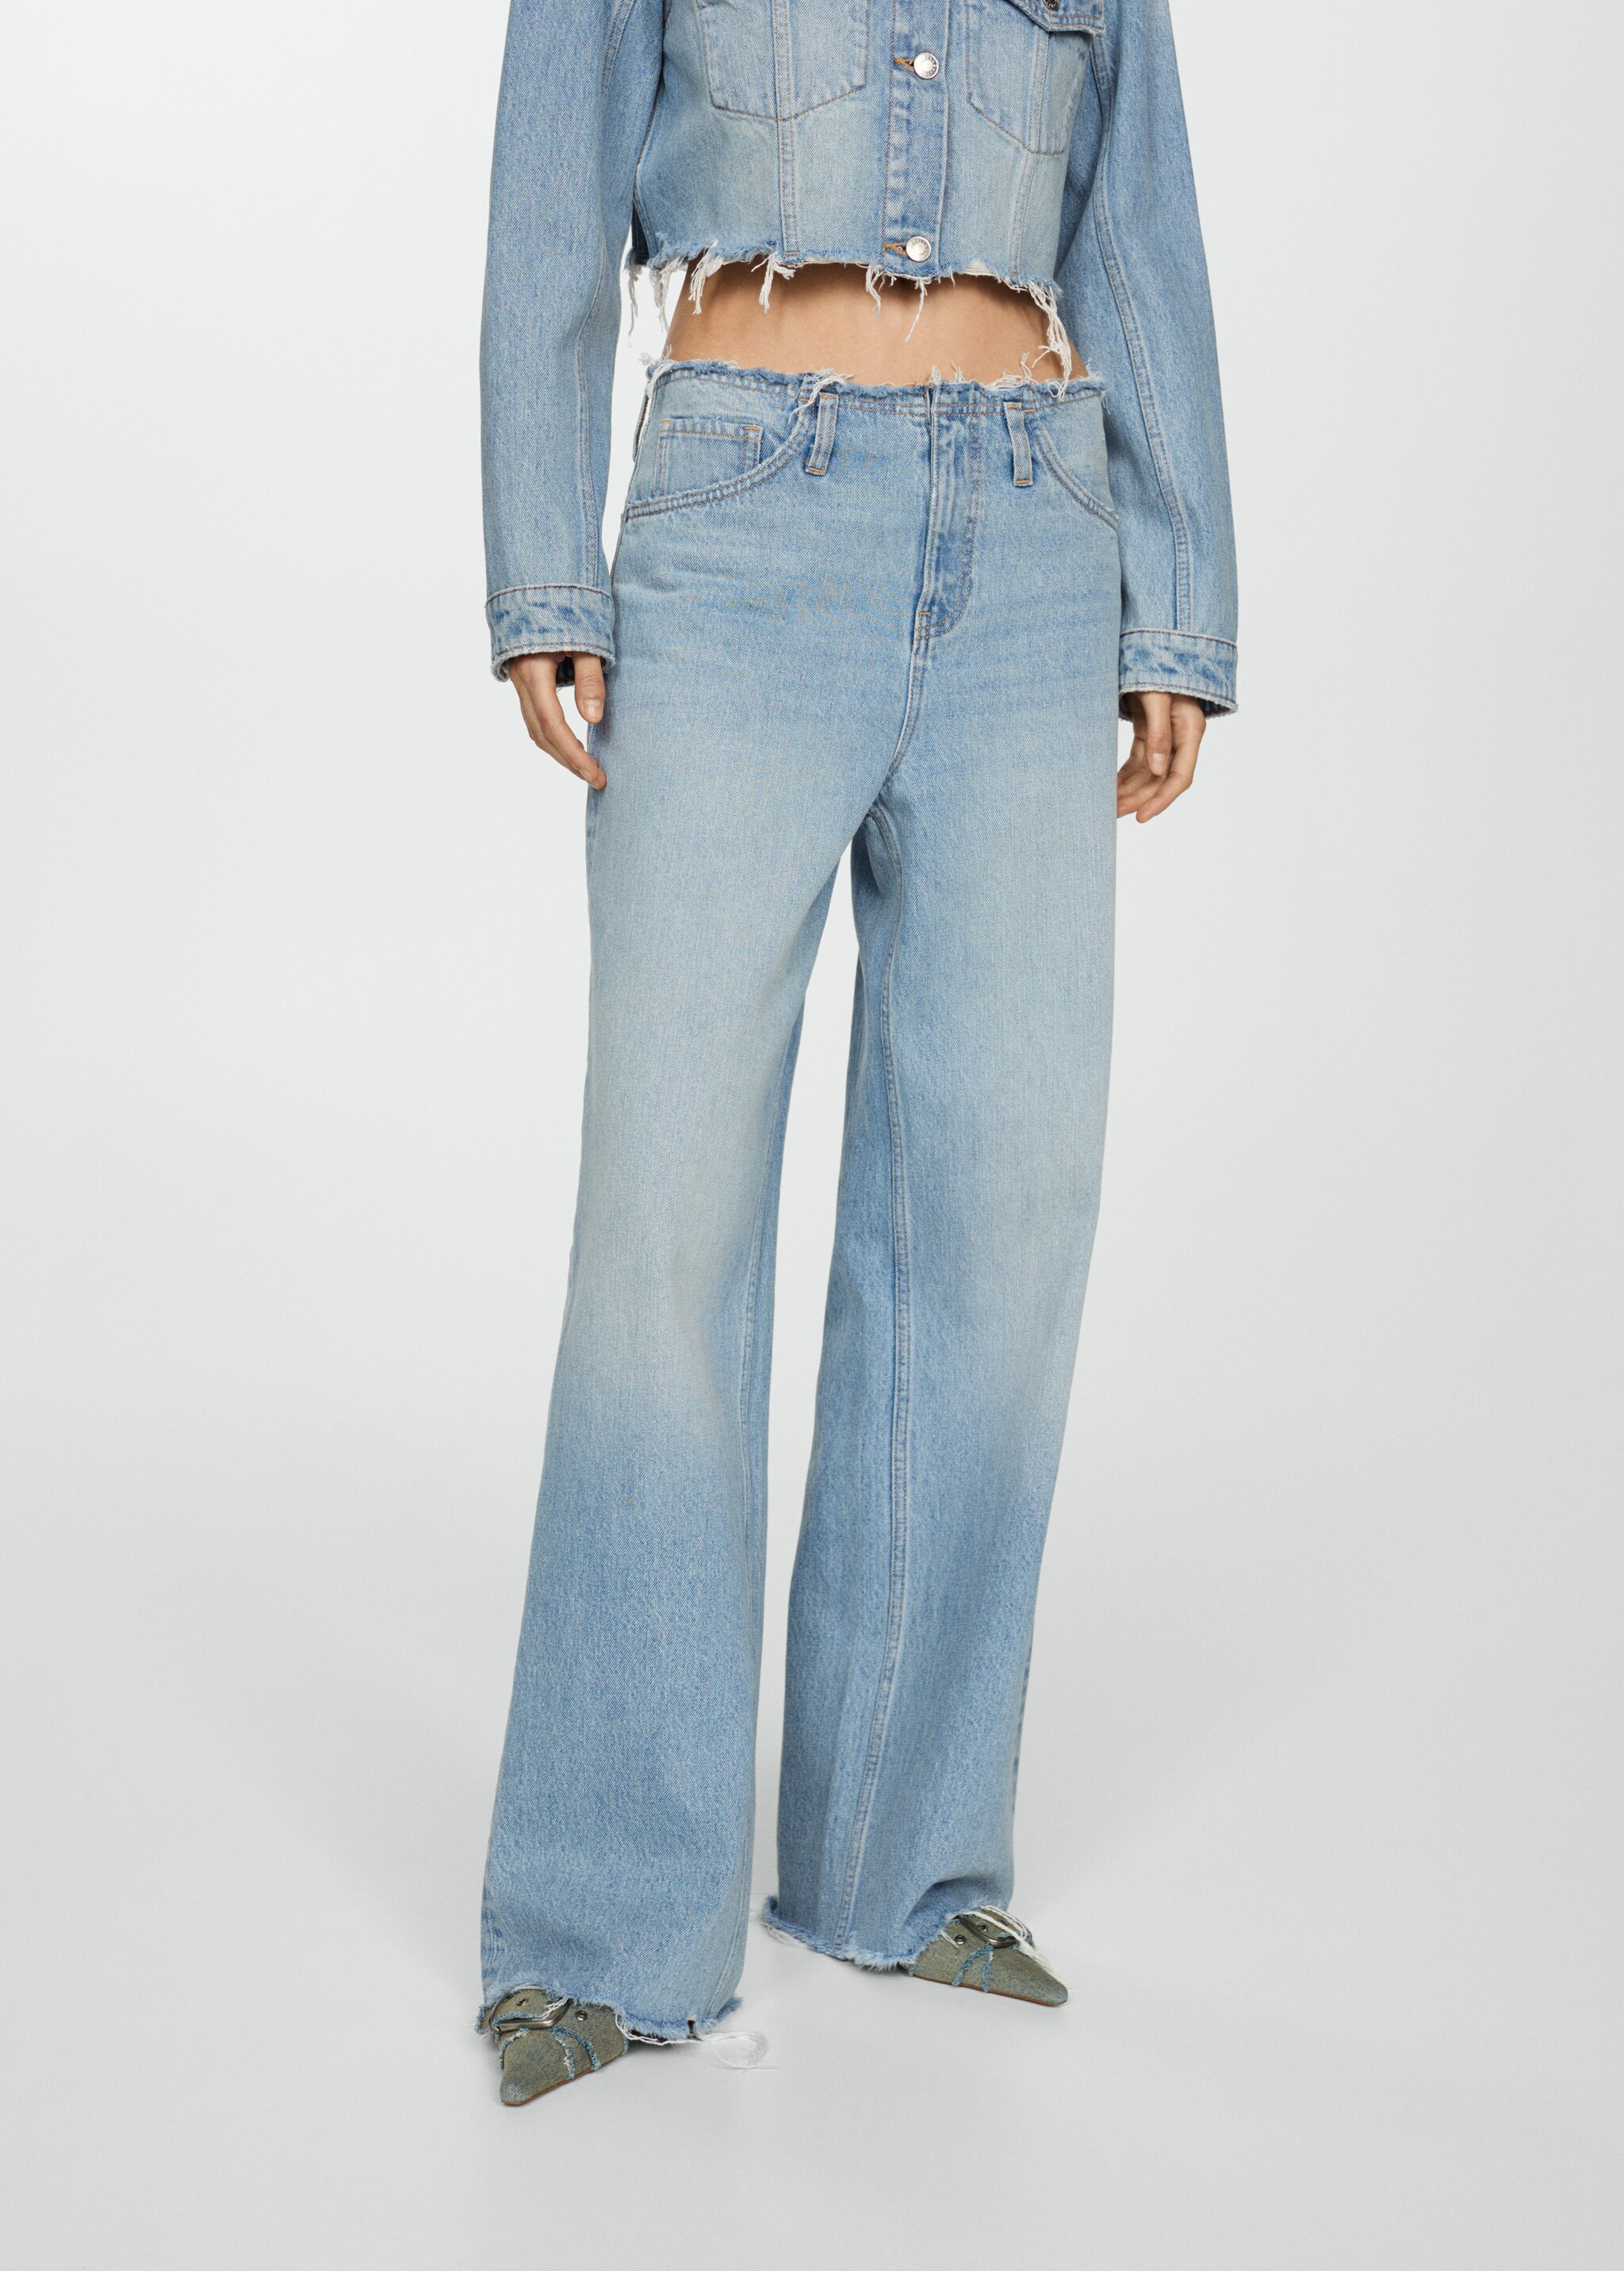 Wideleg jeans with frayed hem - Medium plane